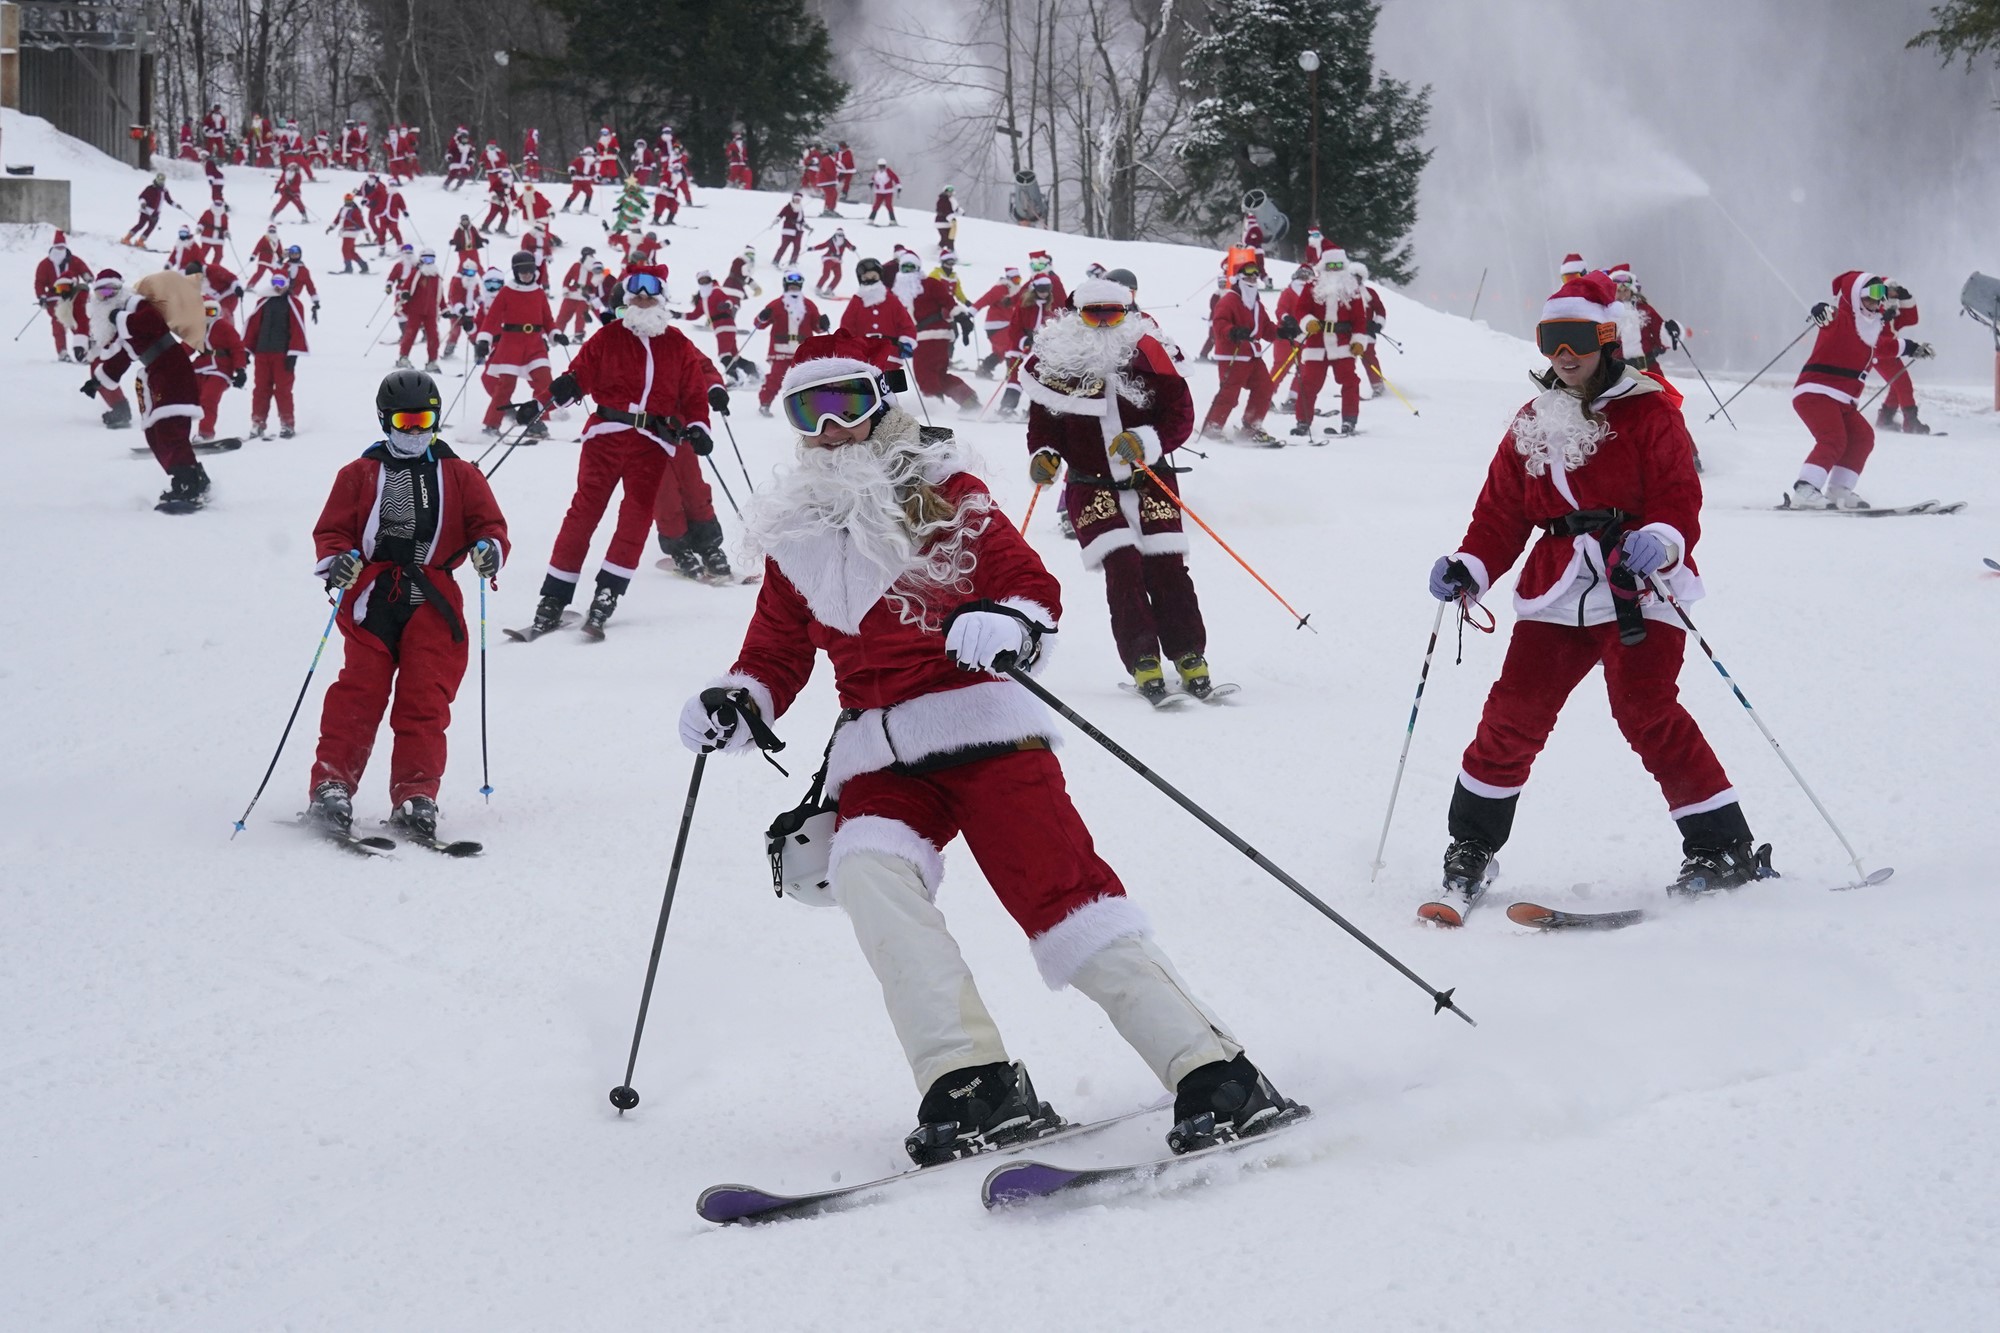 People in santa costumes ski downhill.